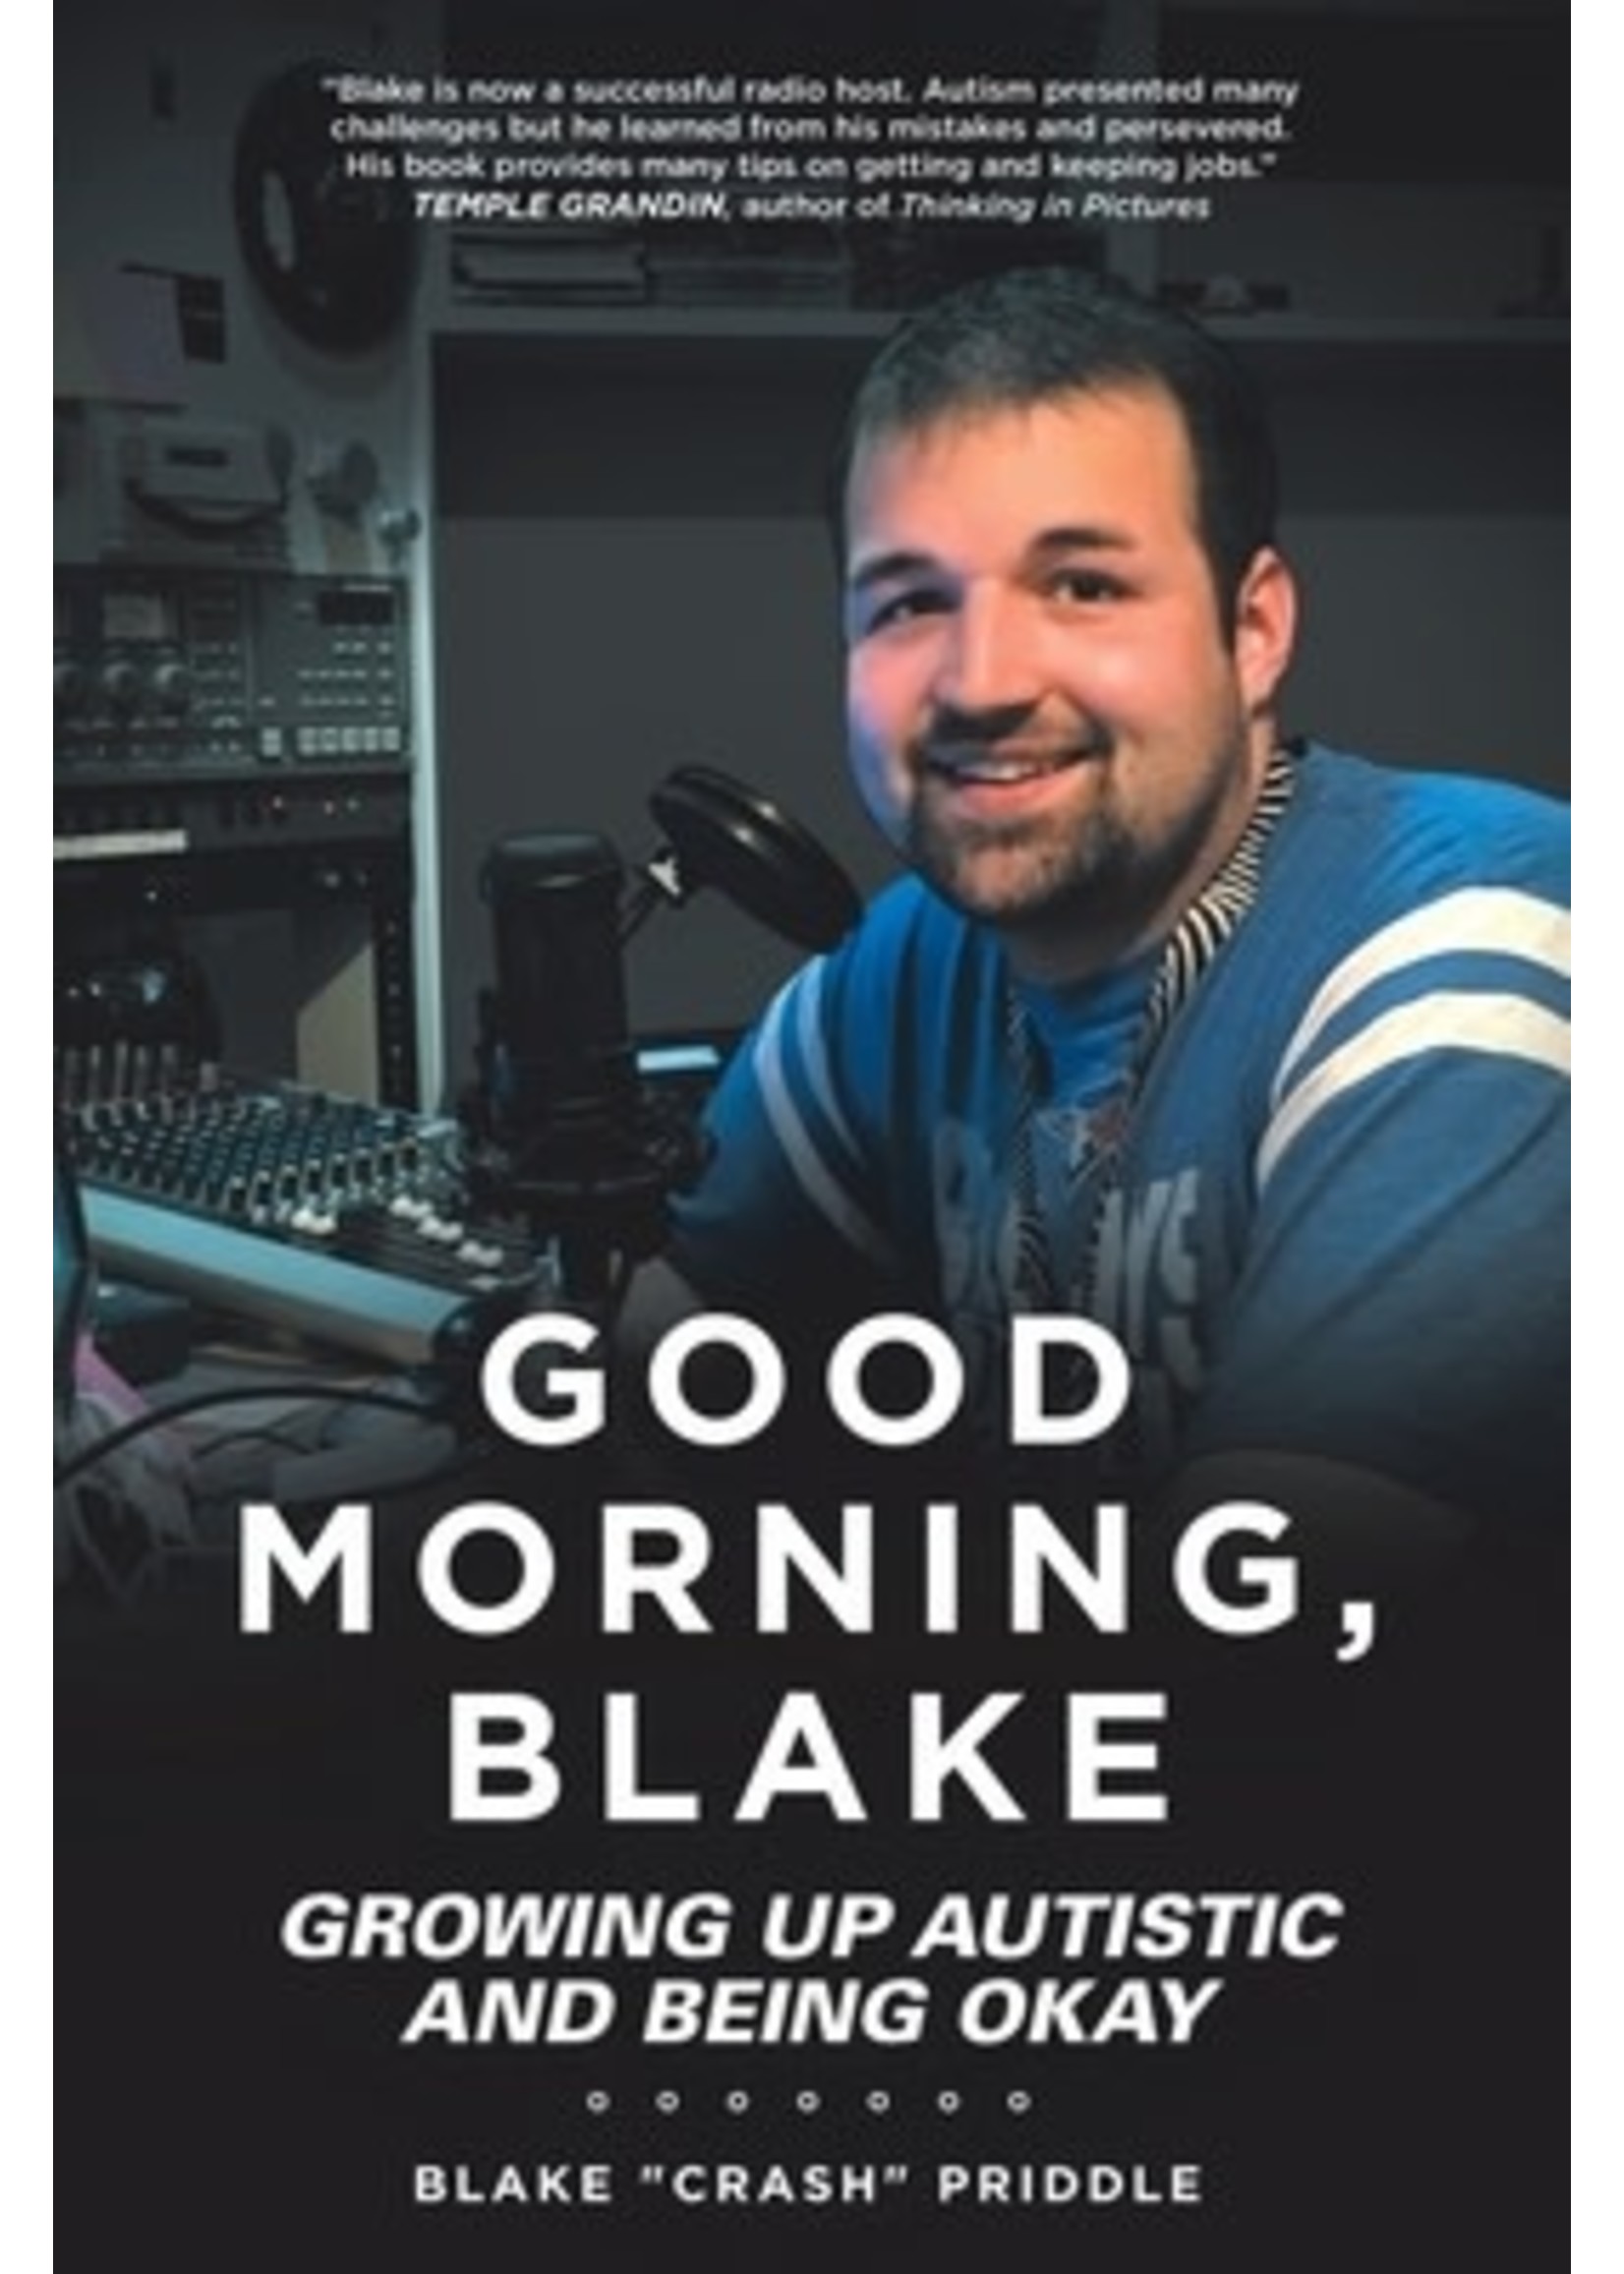 Good Morning, Blake: Growing Up Autistic and Being Okay by Blake "Crash" Priddle